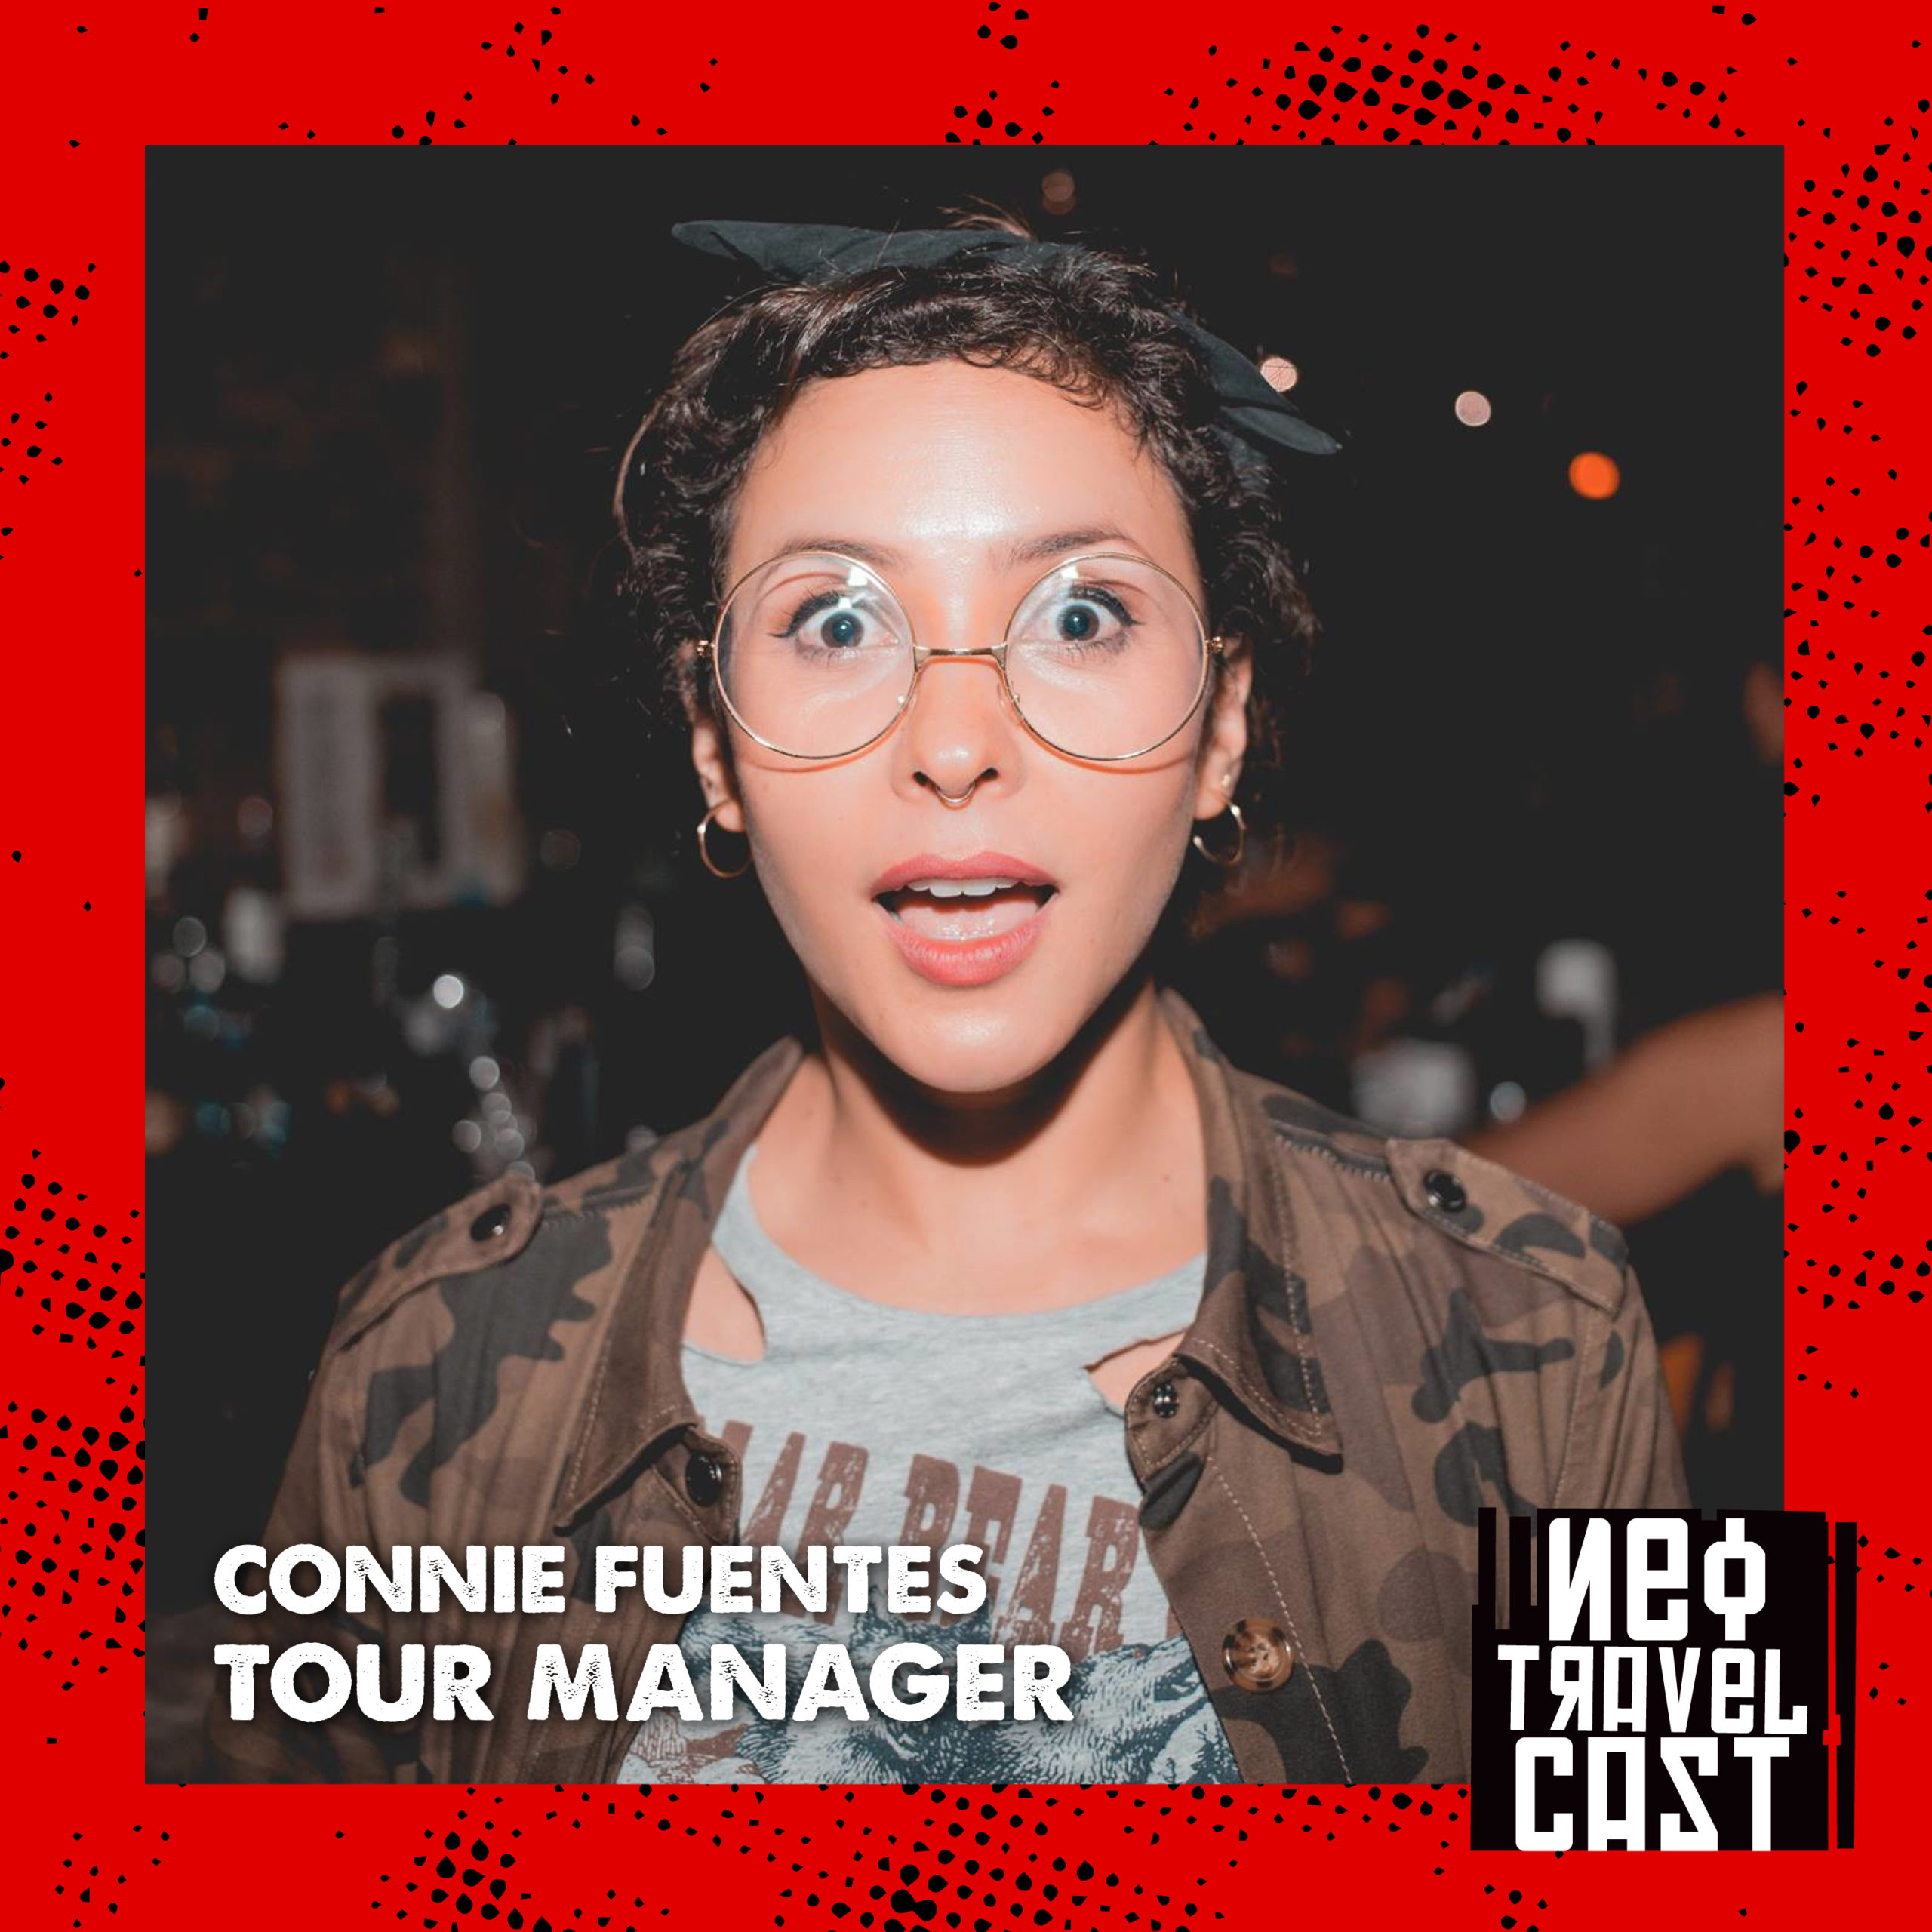 Neo Travel Cast - Connie Fuentes